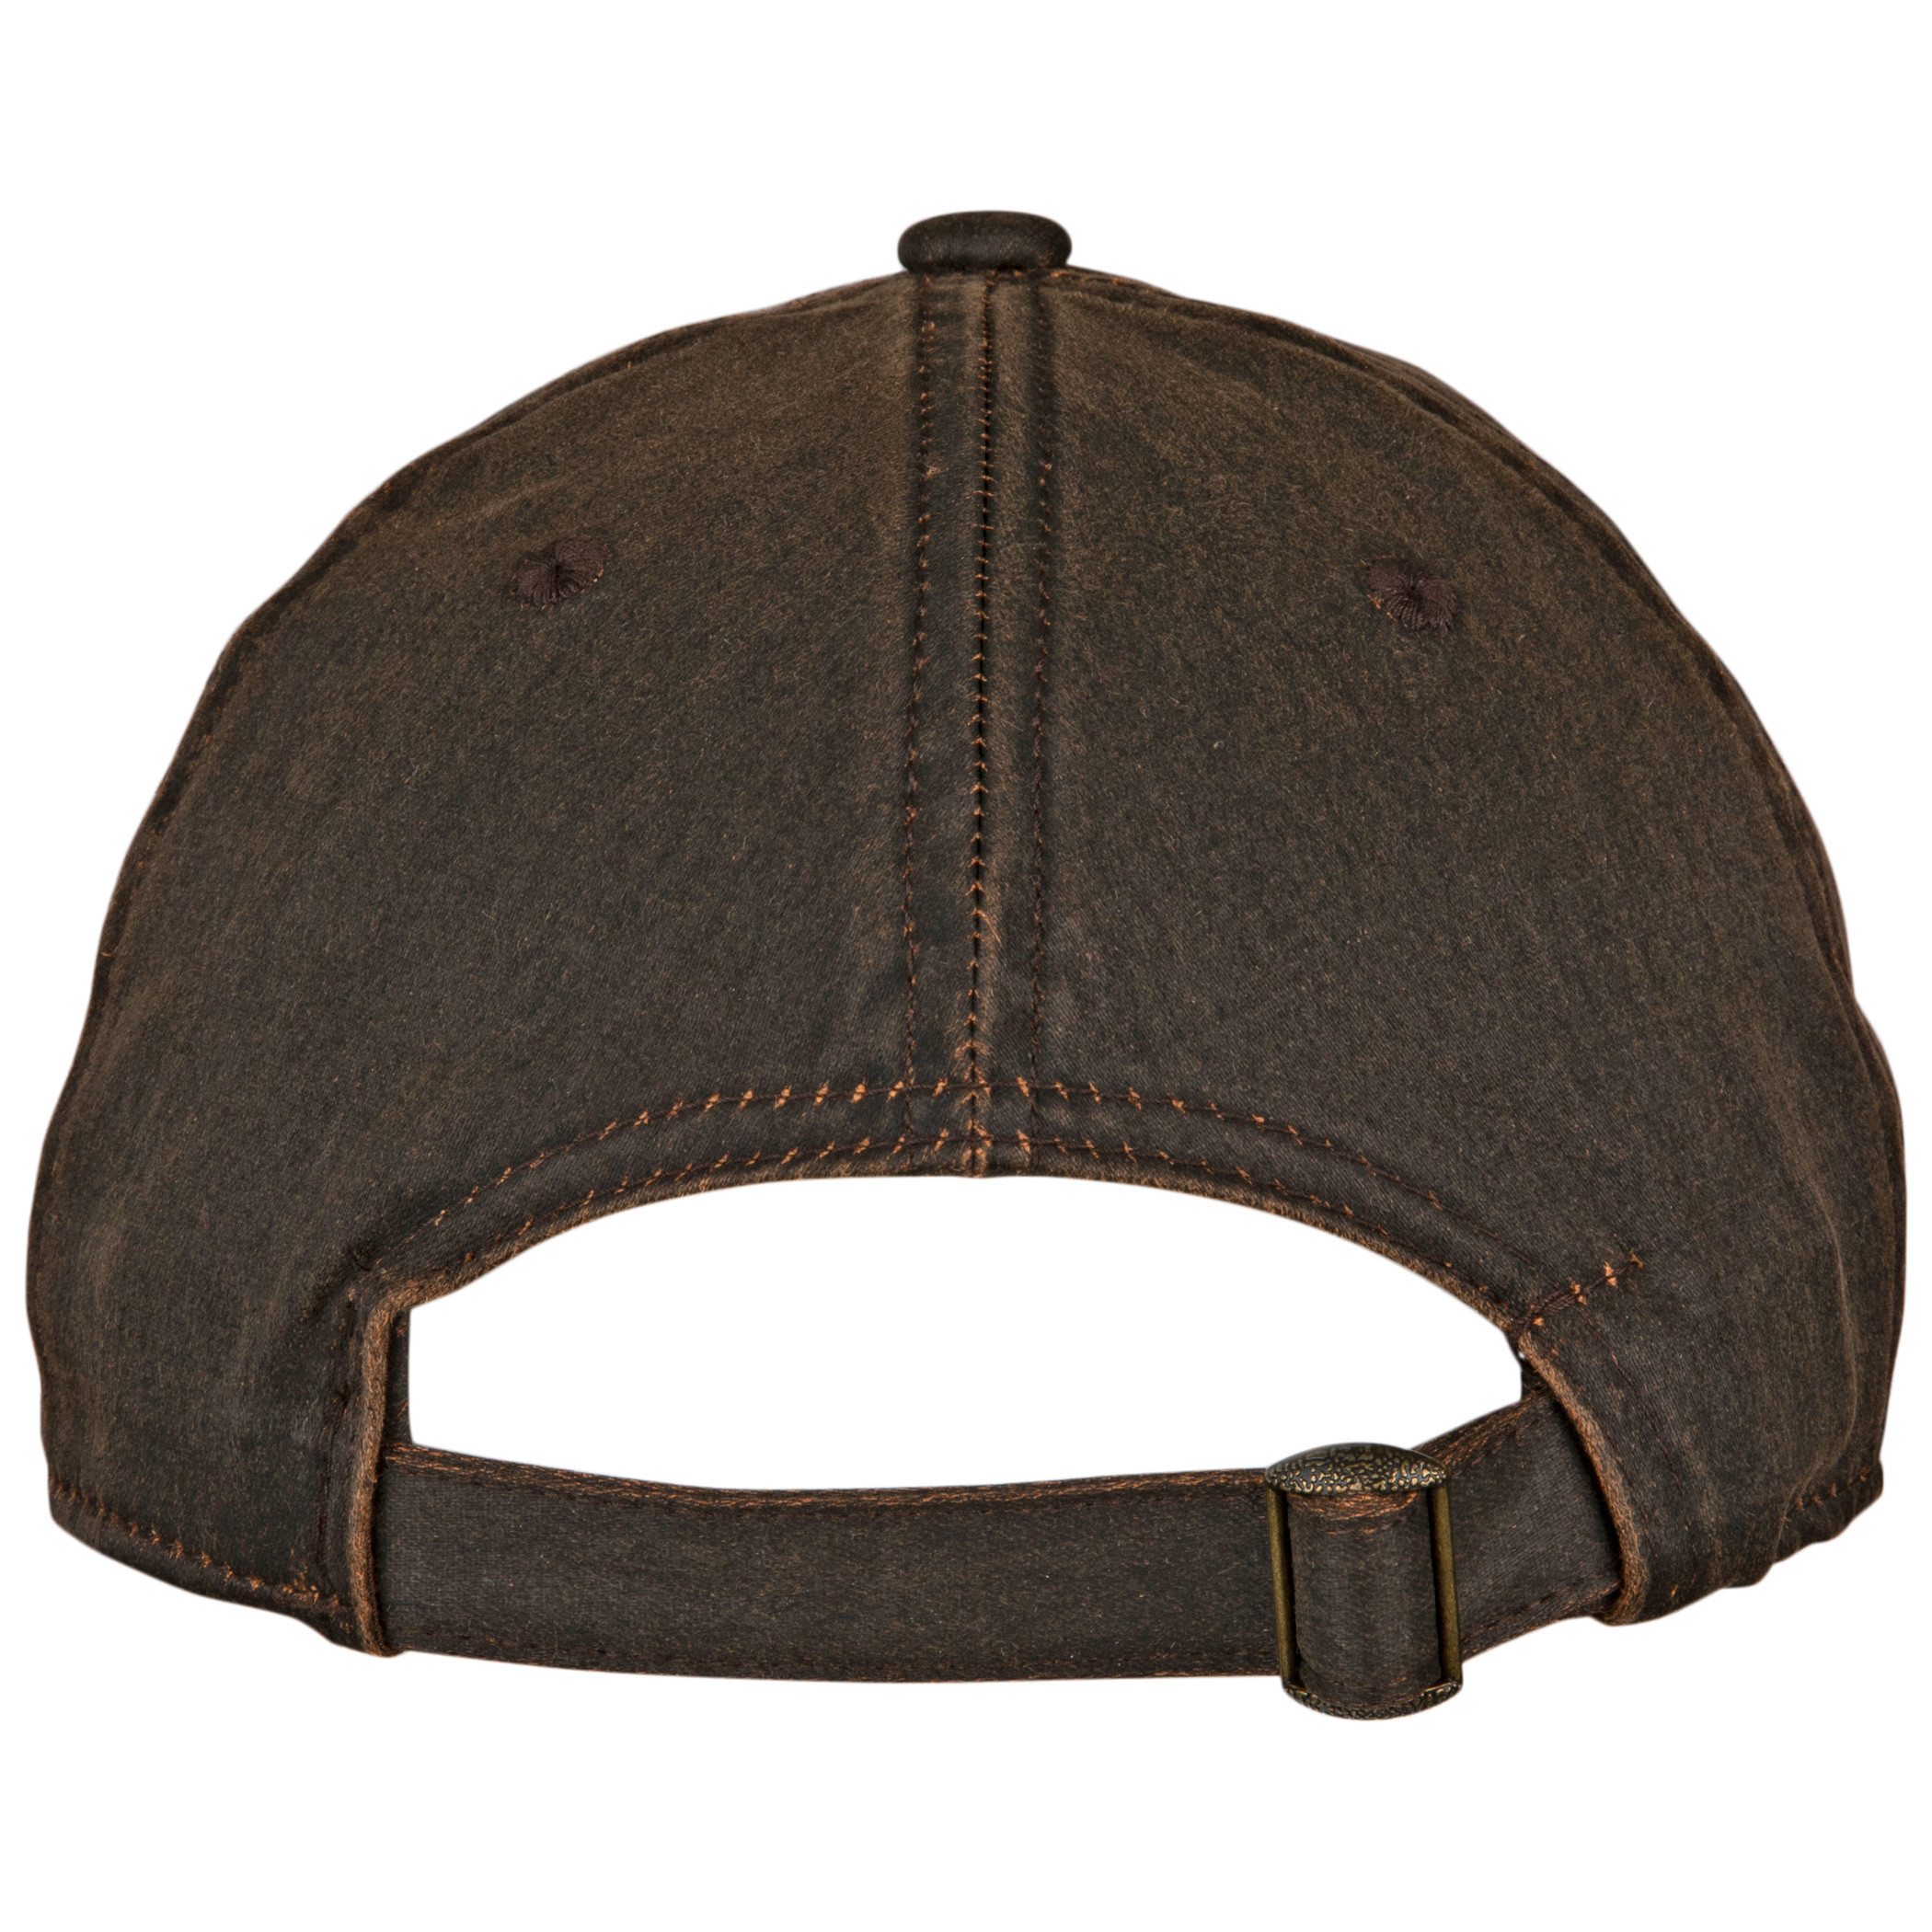 Maker's Mark Whiskey Label Oil Cloth Round Brim Adjustable Hat